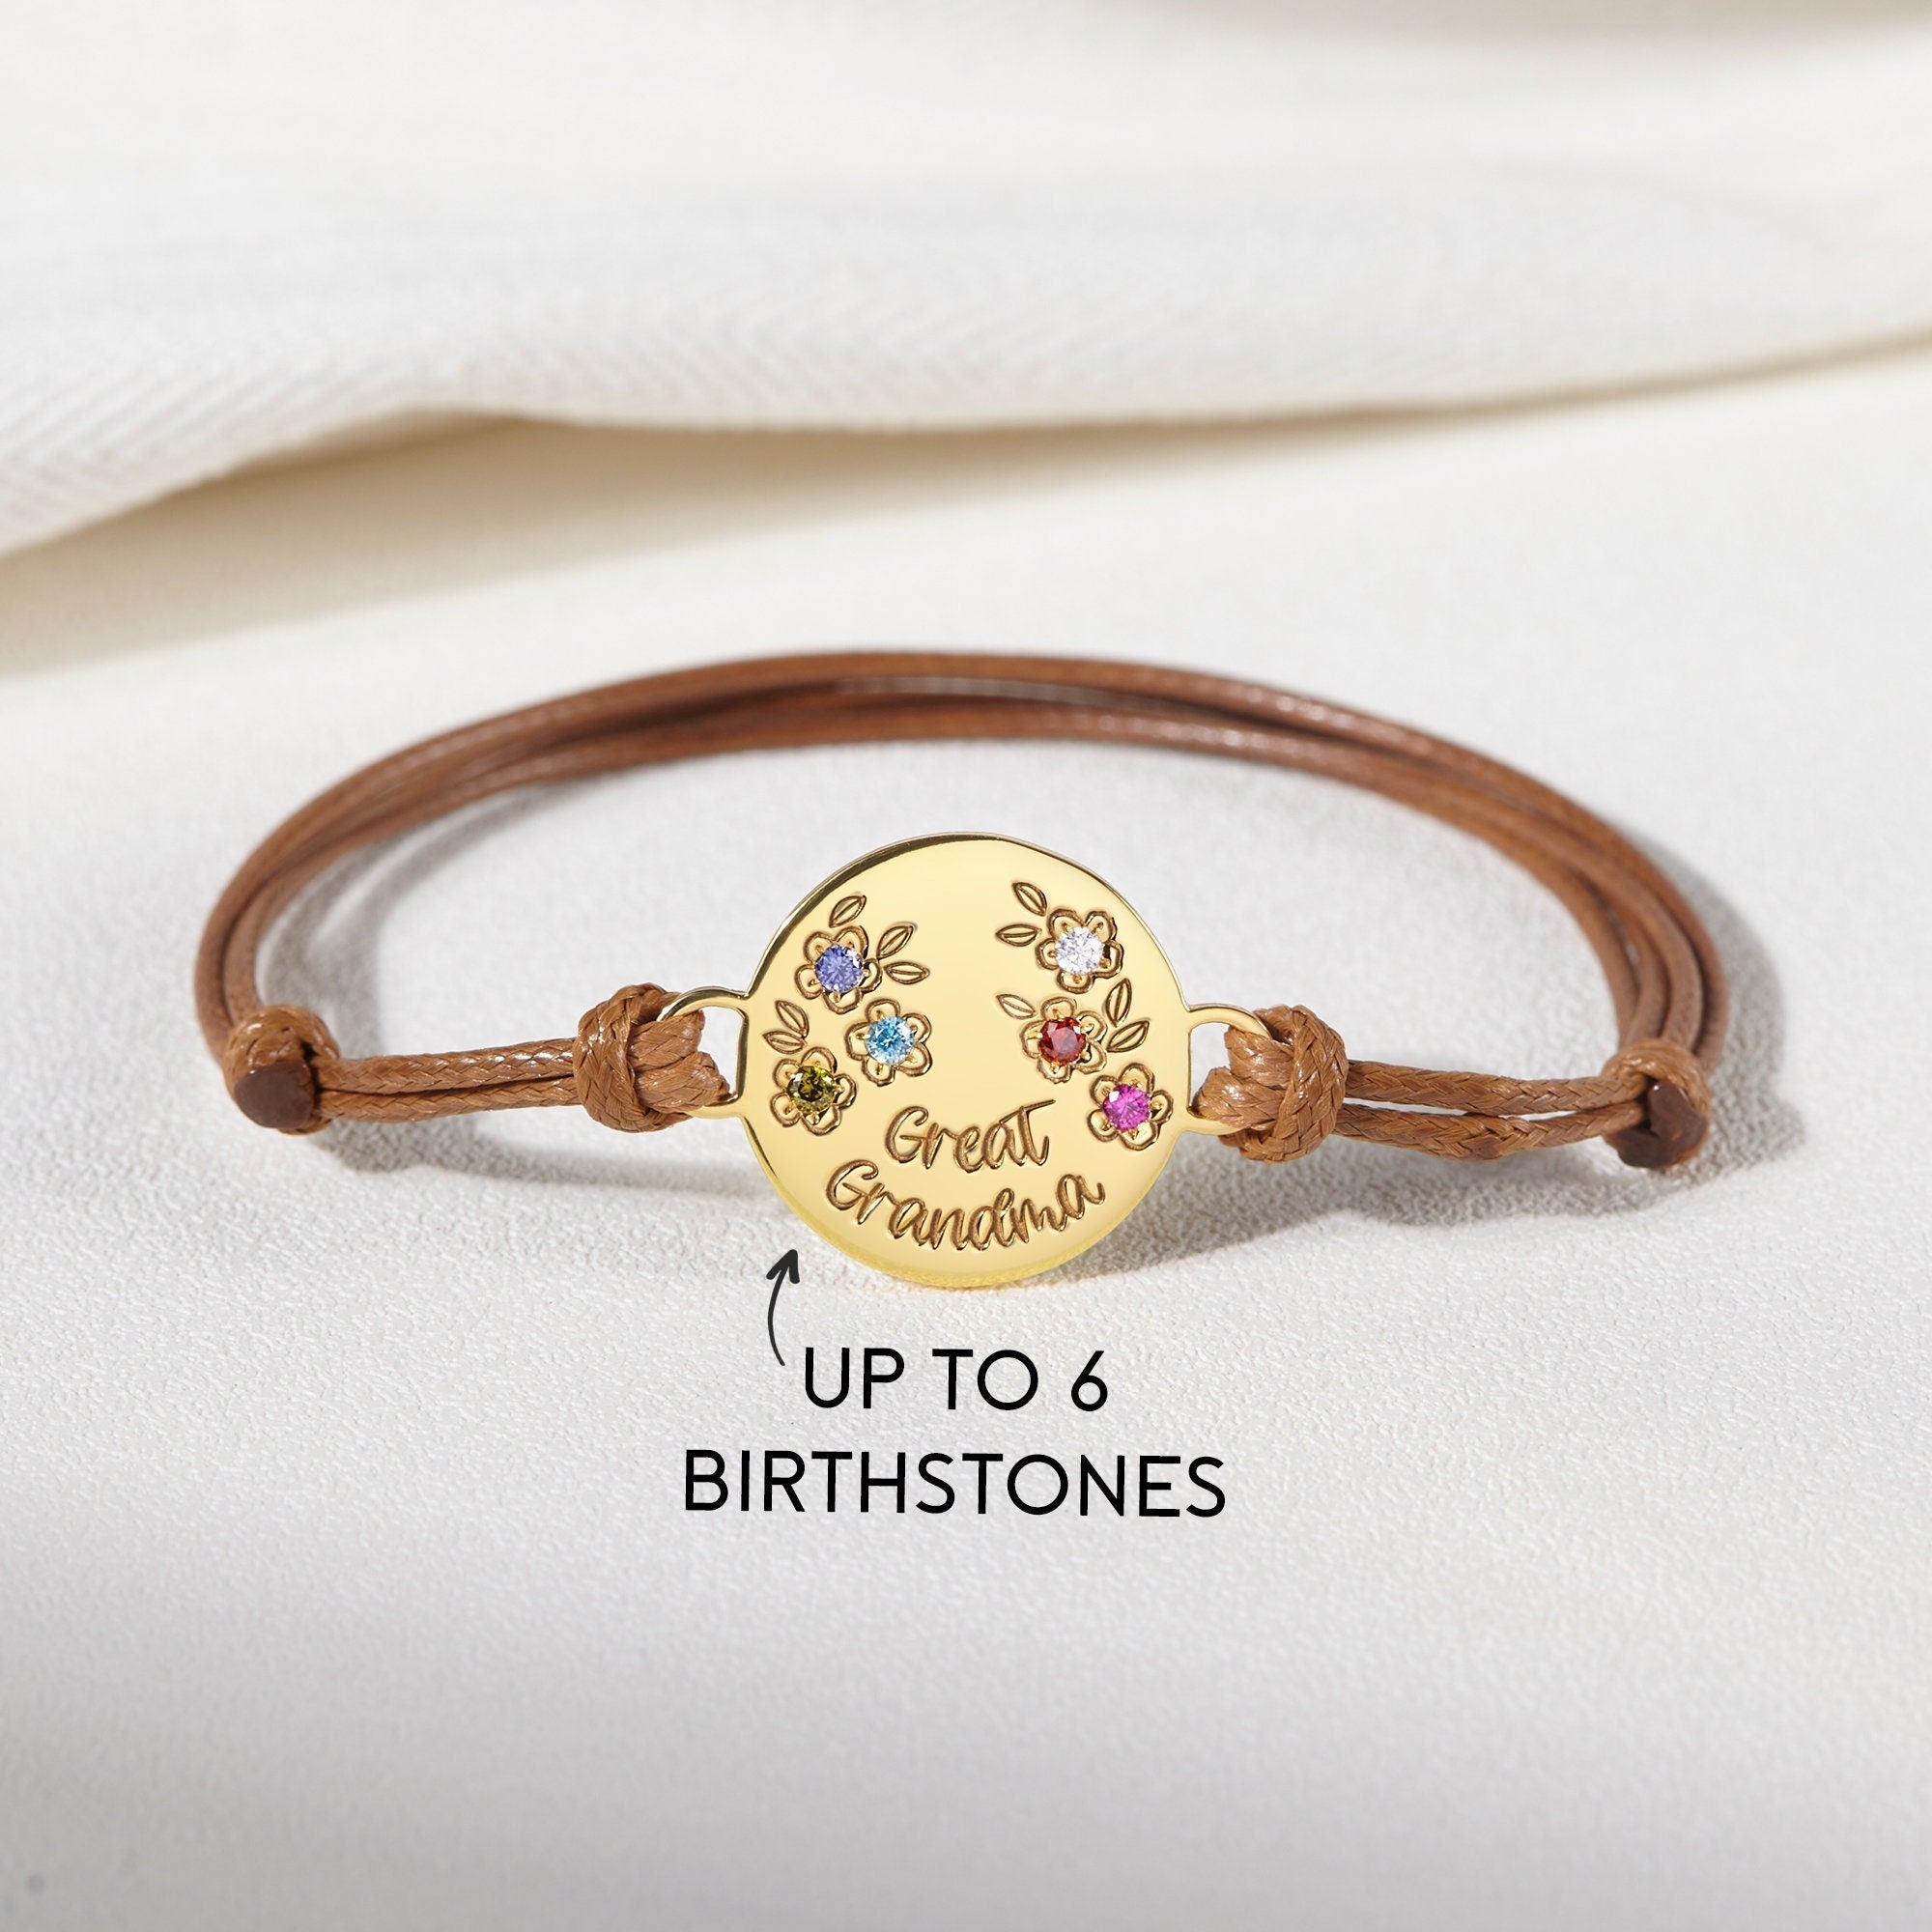 Mother Birthstone Bracelet With Kid‘s Birthstones